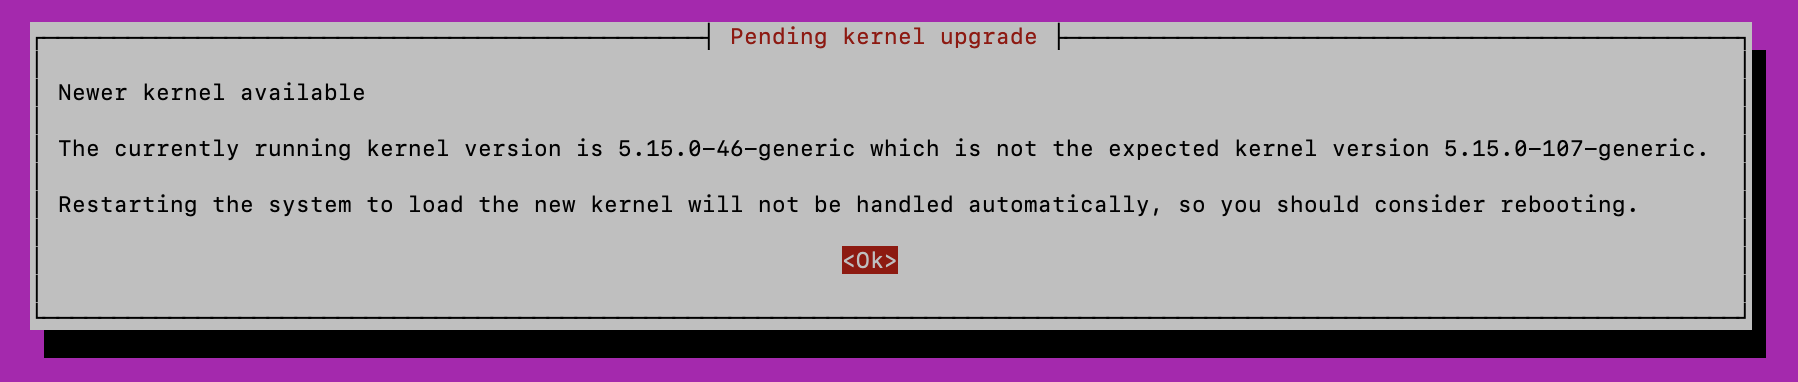 Pending kernel upgrade